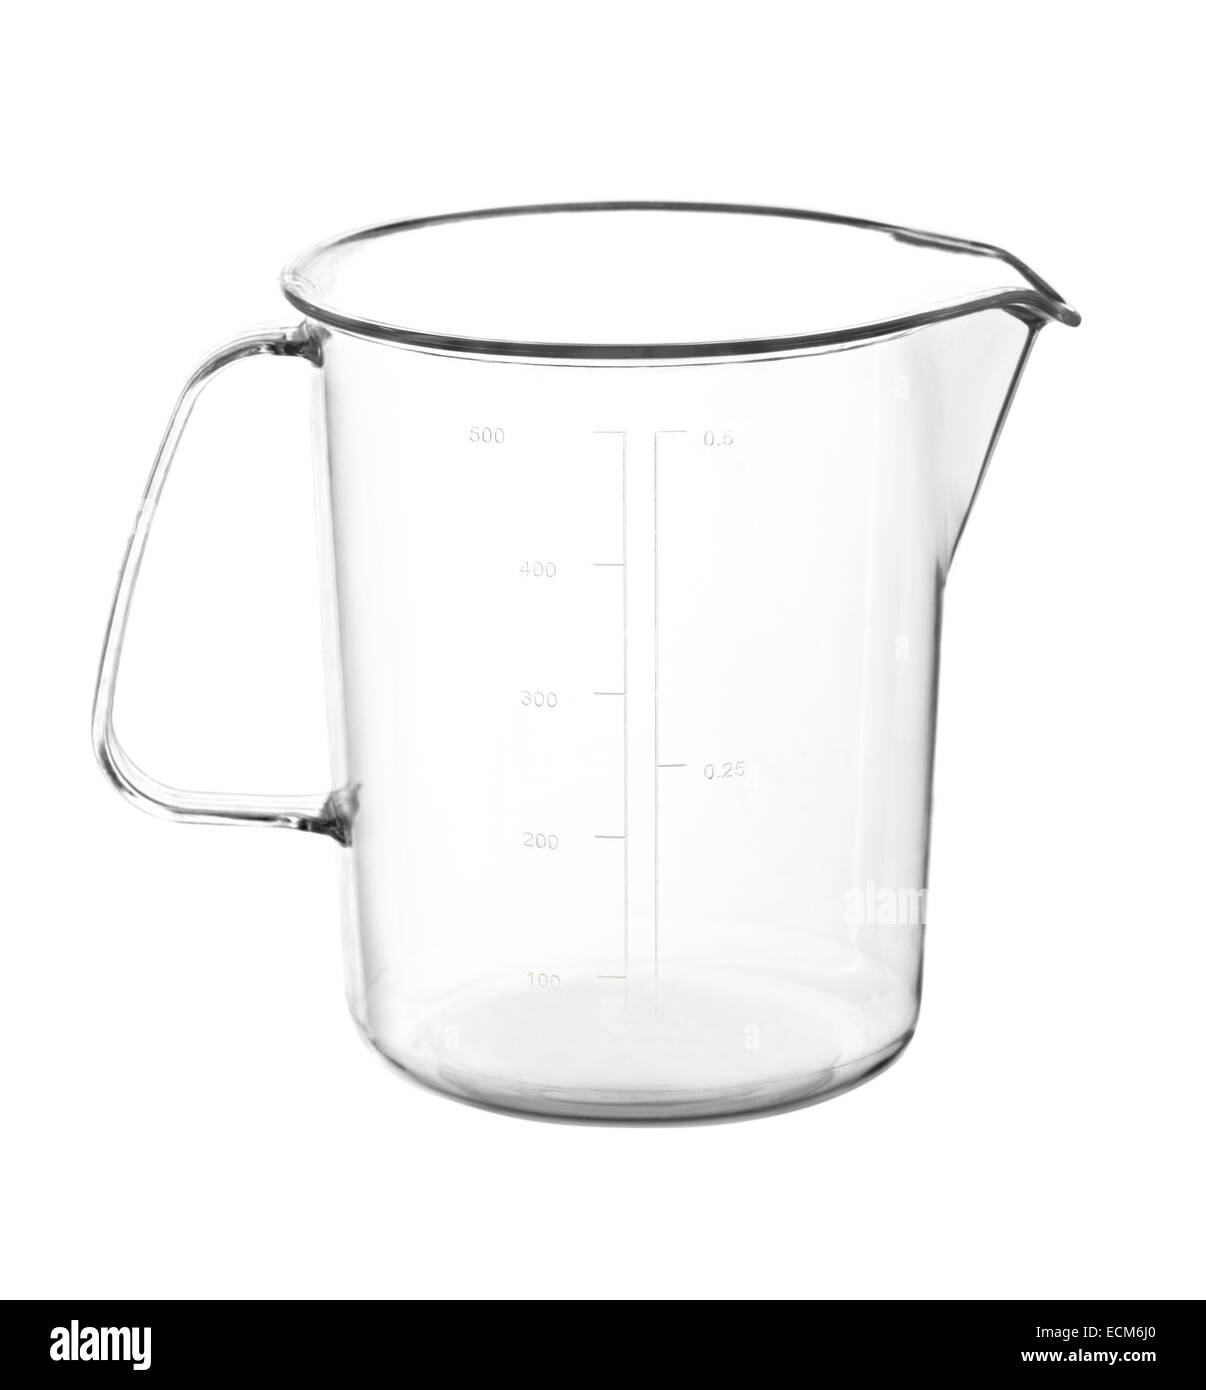 Measuring mug on a white background Stock Photo